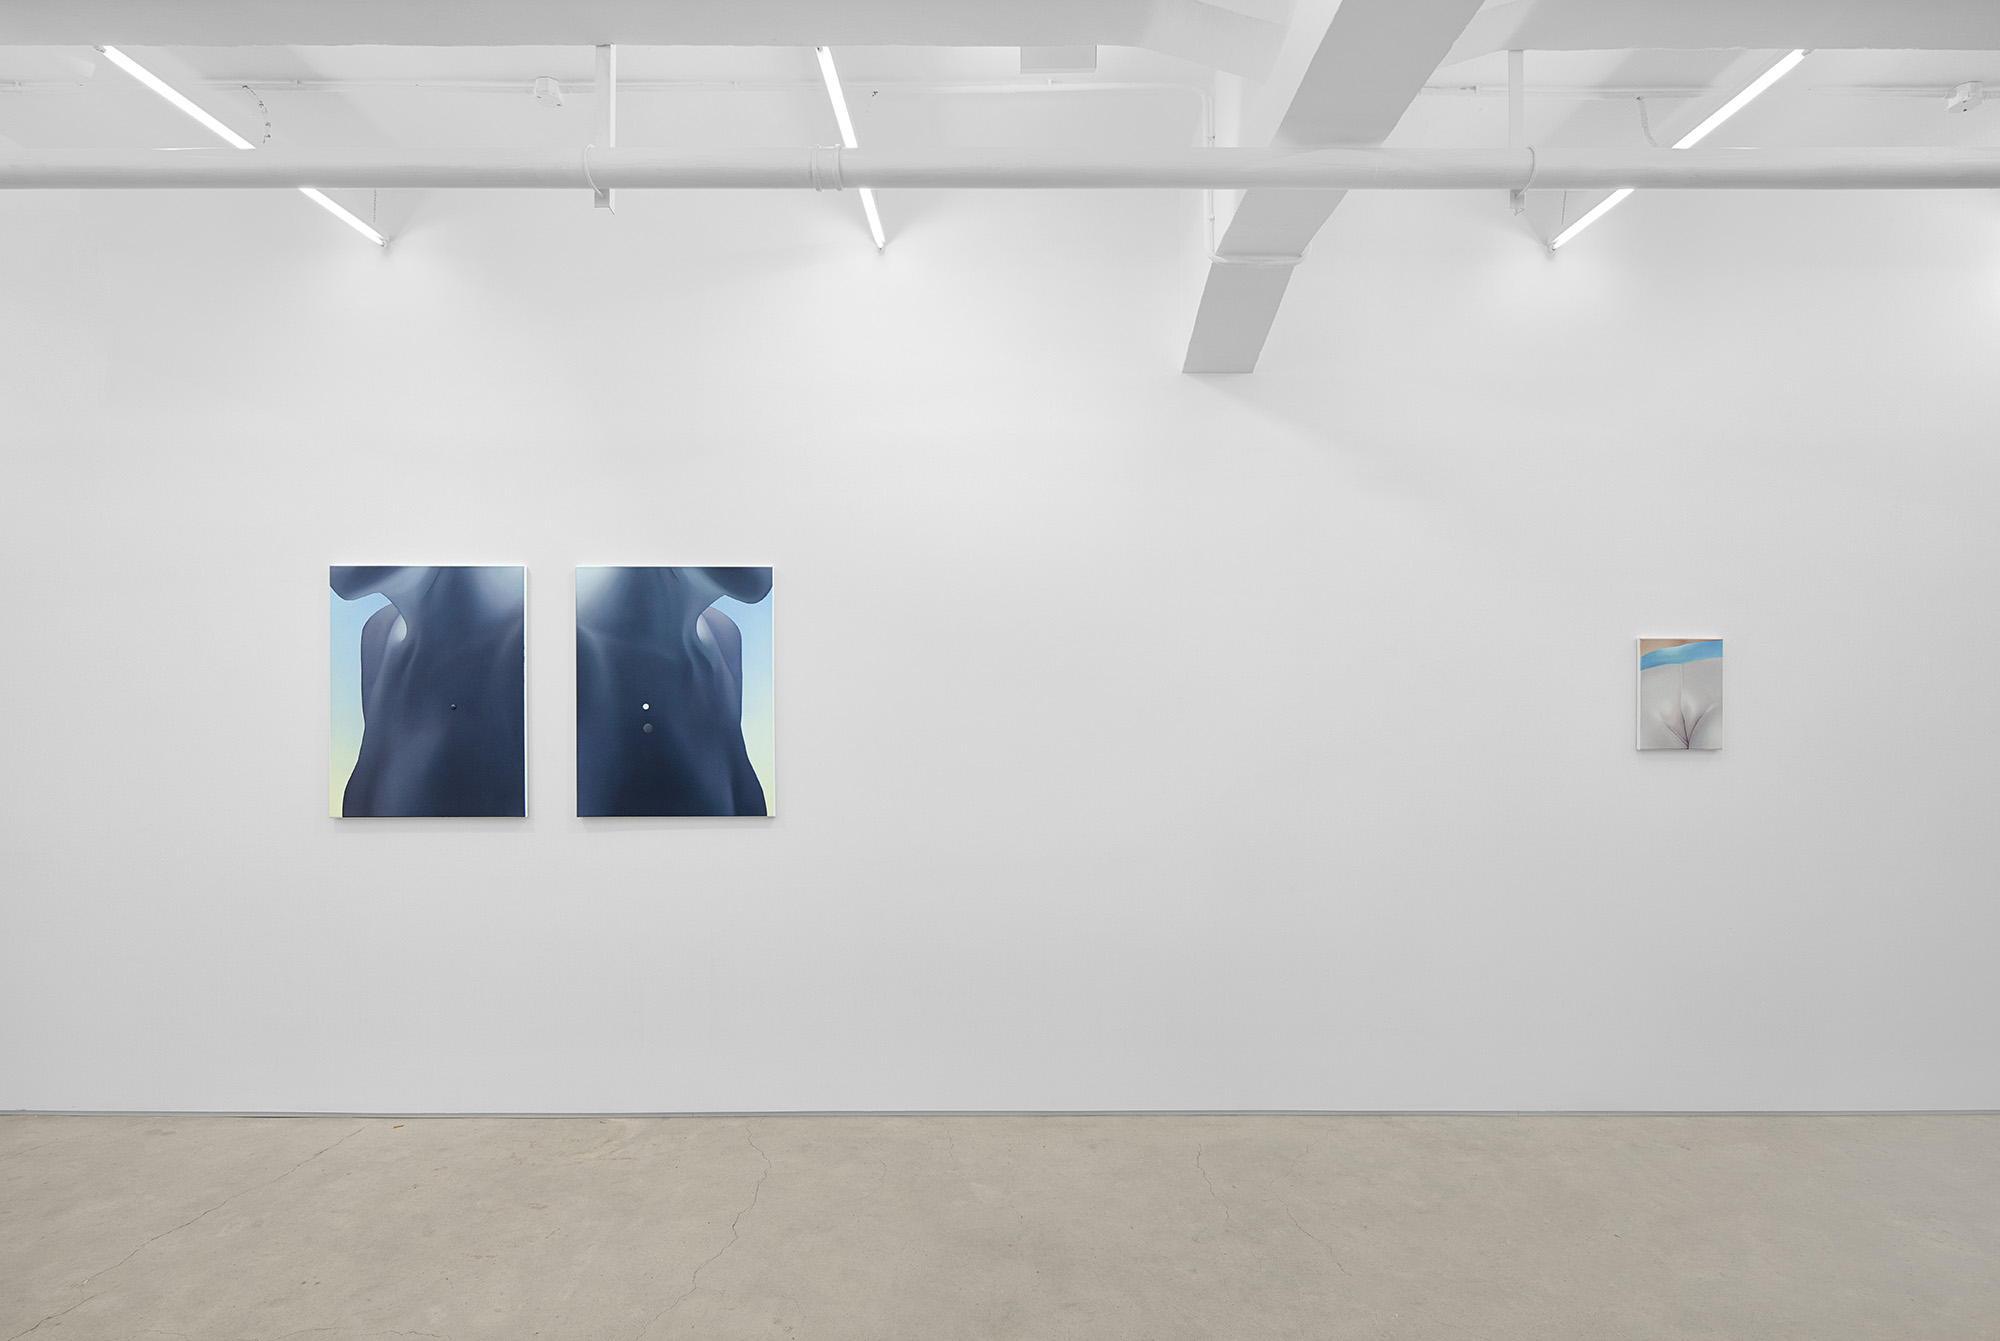 Vivian Greven, The Negatives, solo exhibition at Gallery Vacancy, installation view 24